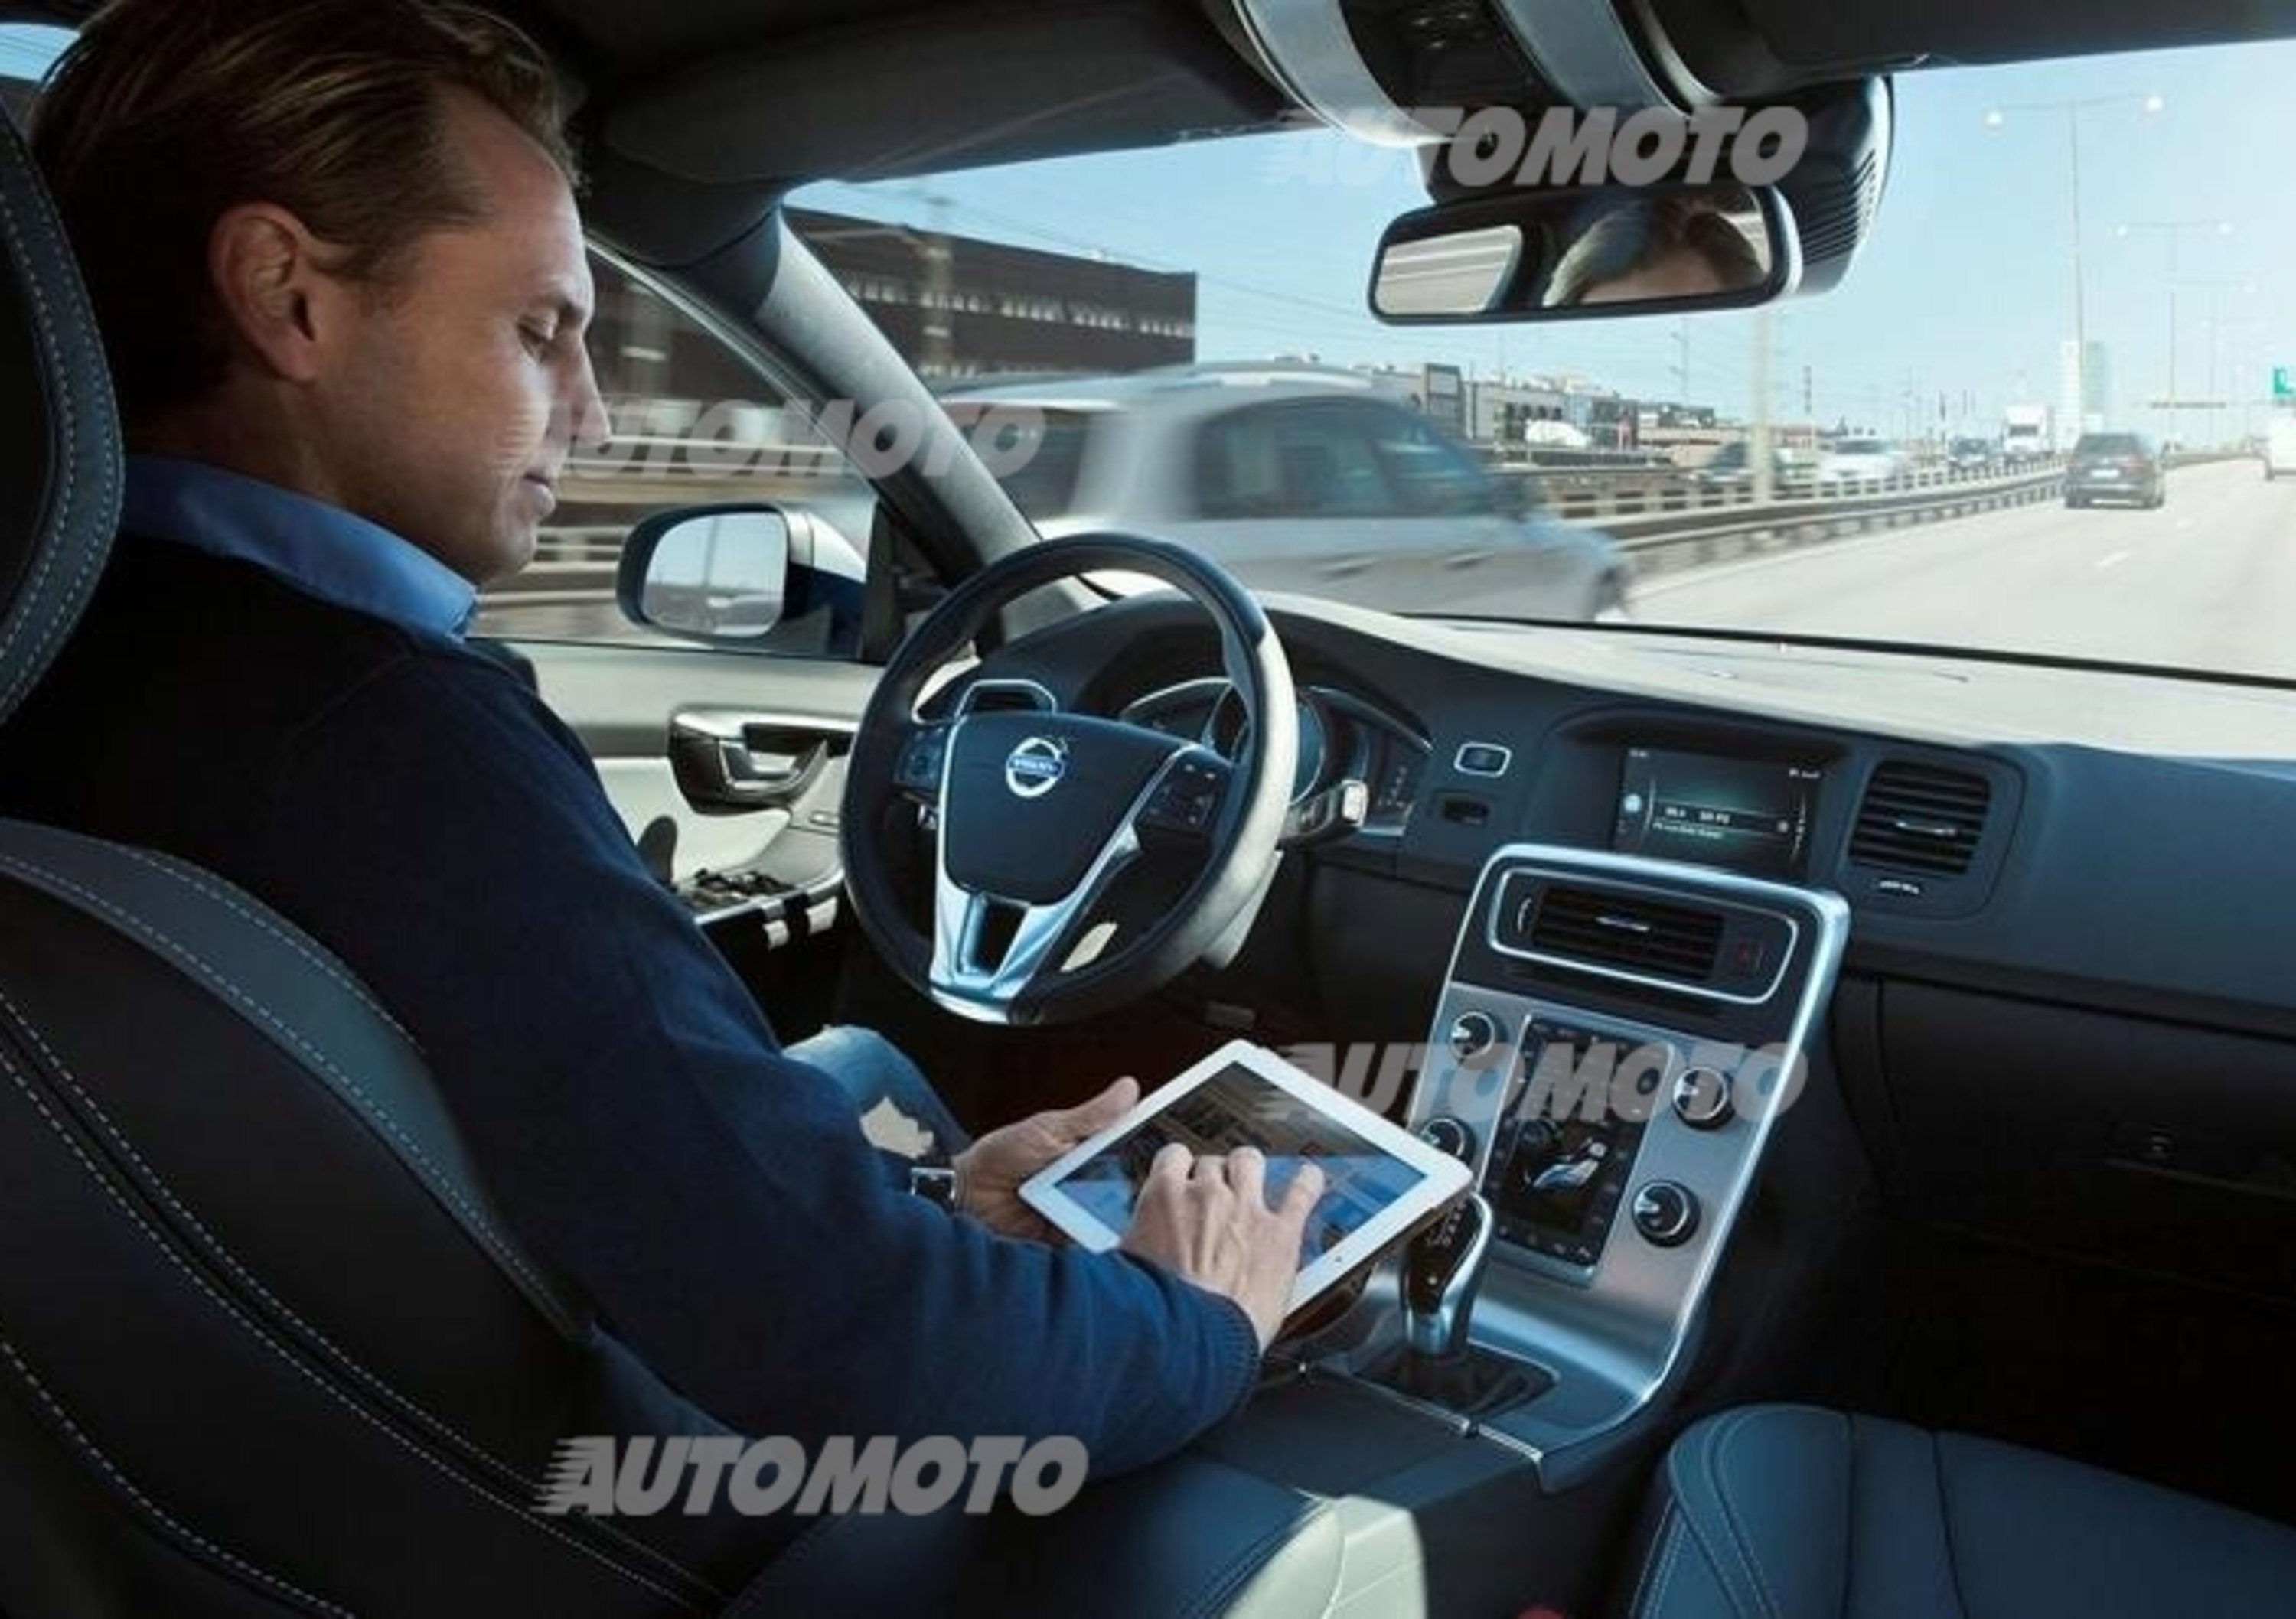 Volvo Drive Me: proseguono i test sulla guida autonoma